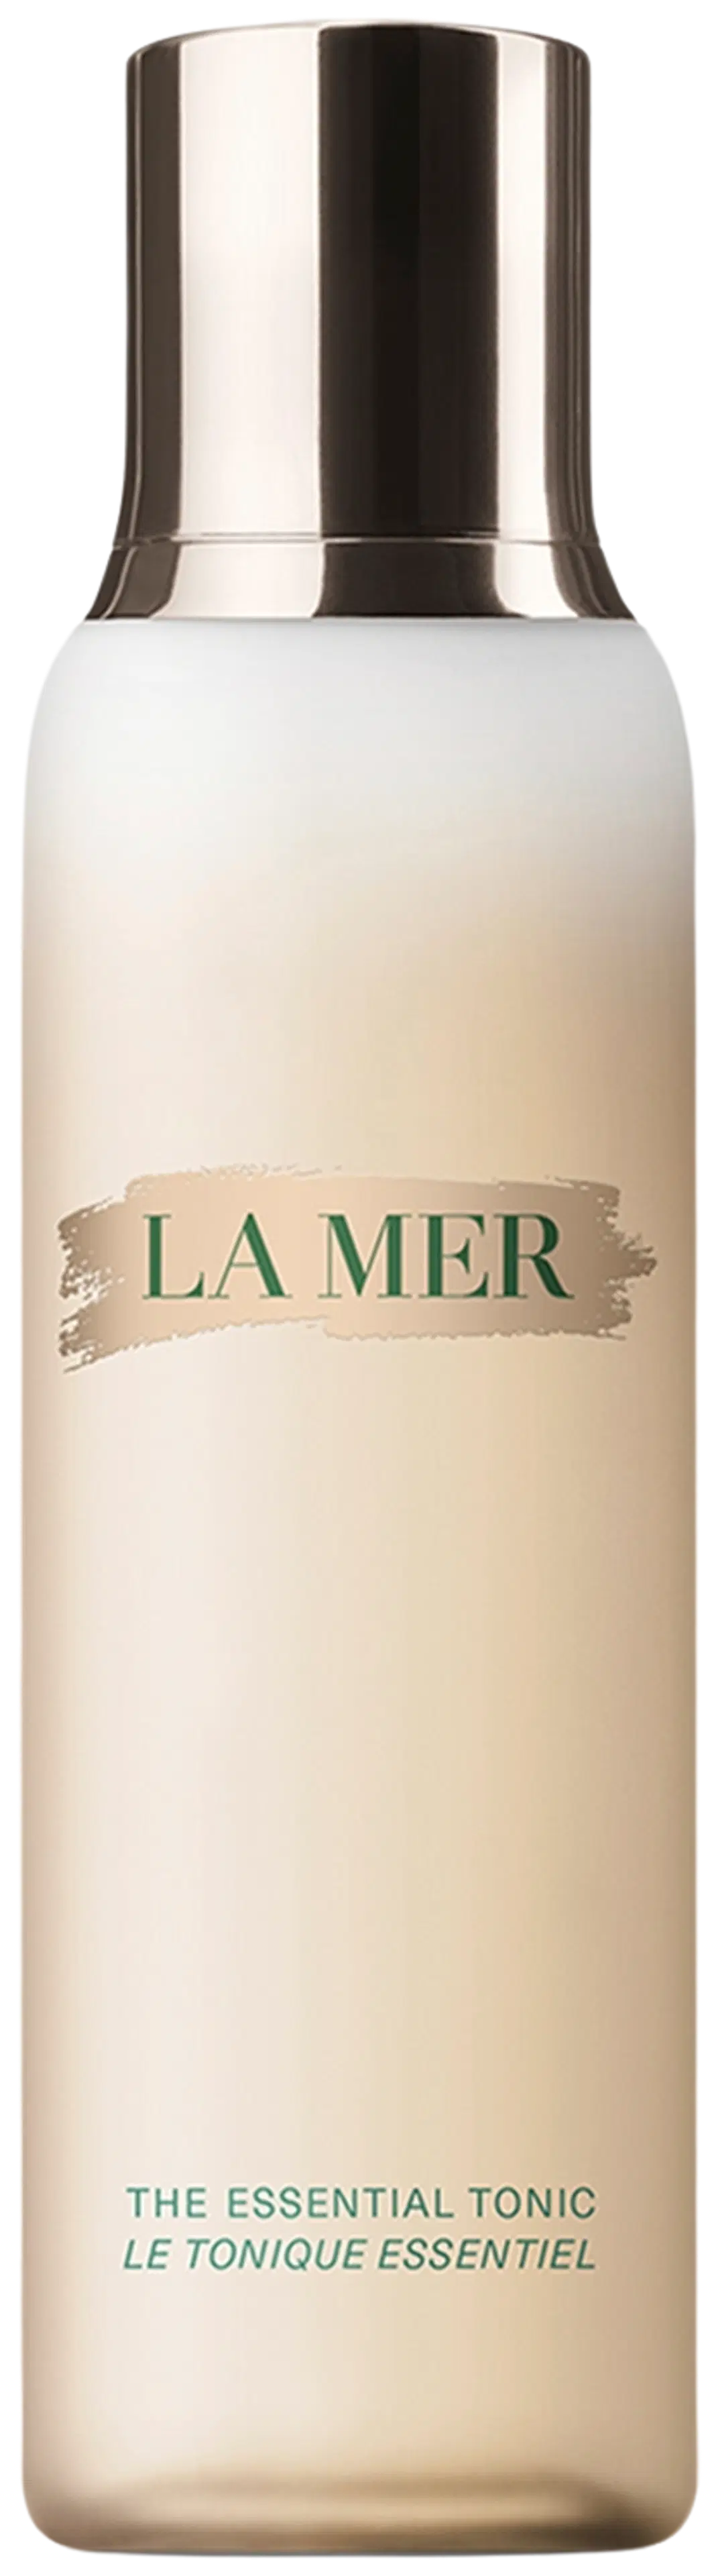 La Mer The Essential Tonic kasvovesi 200 ml